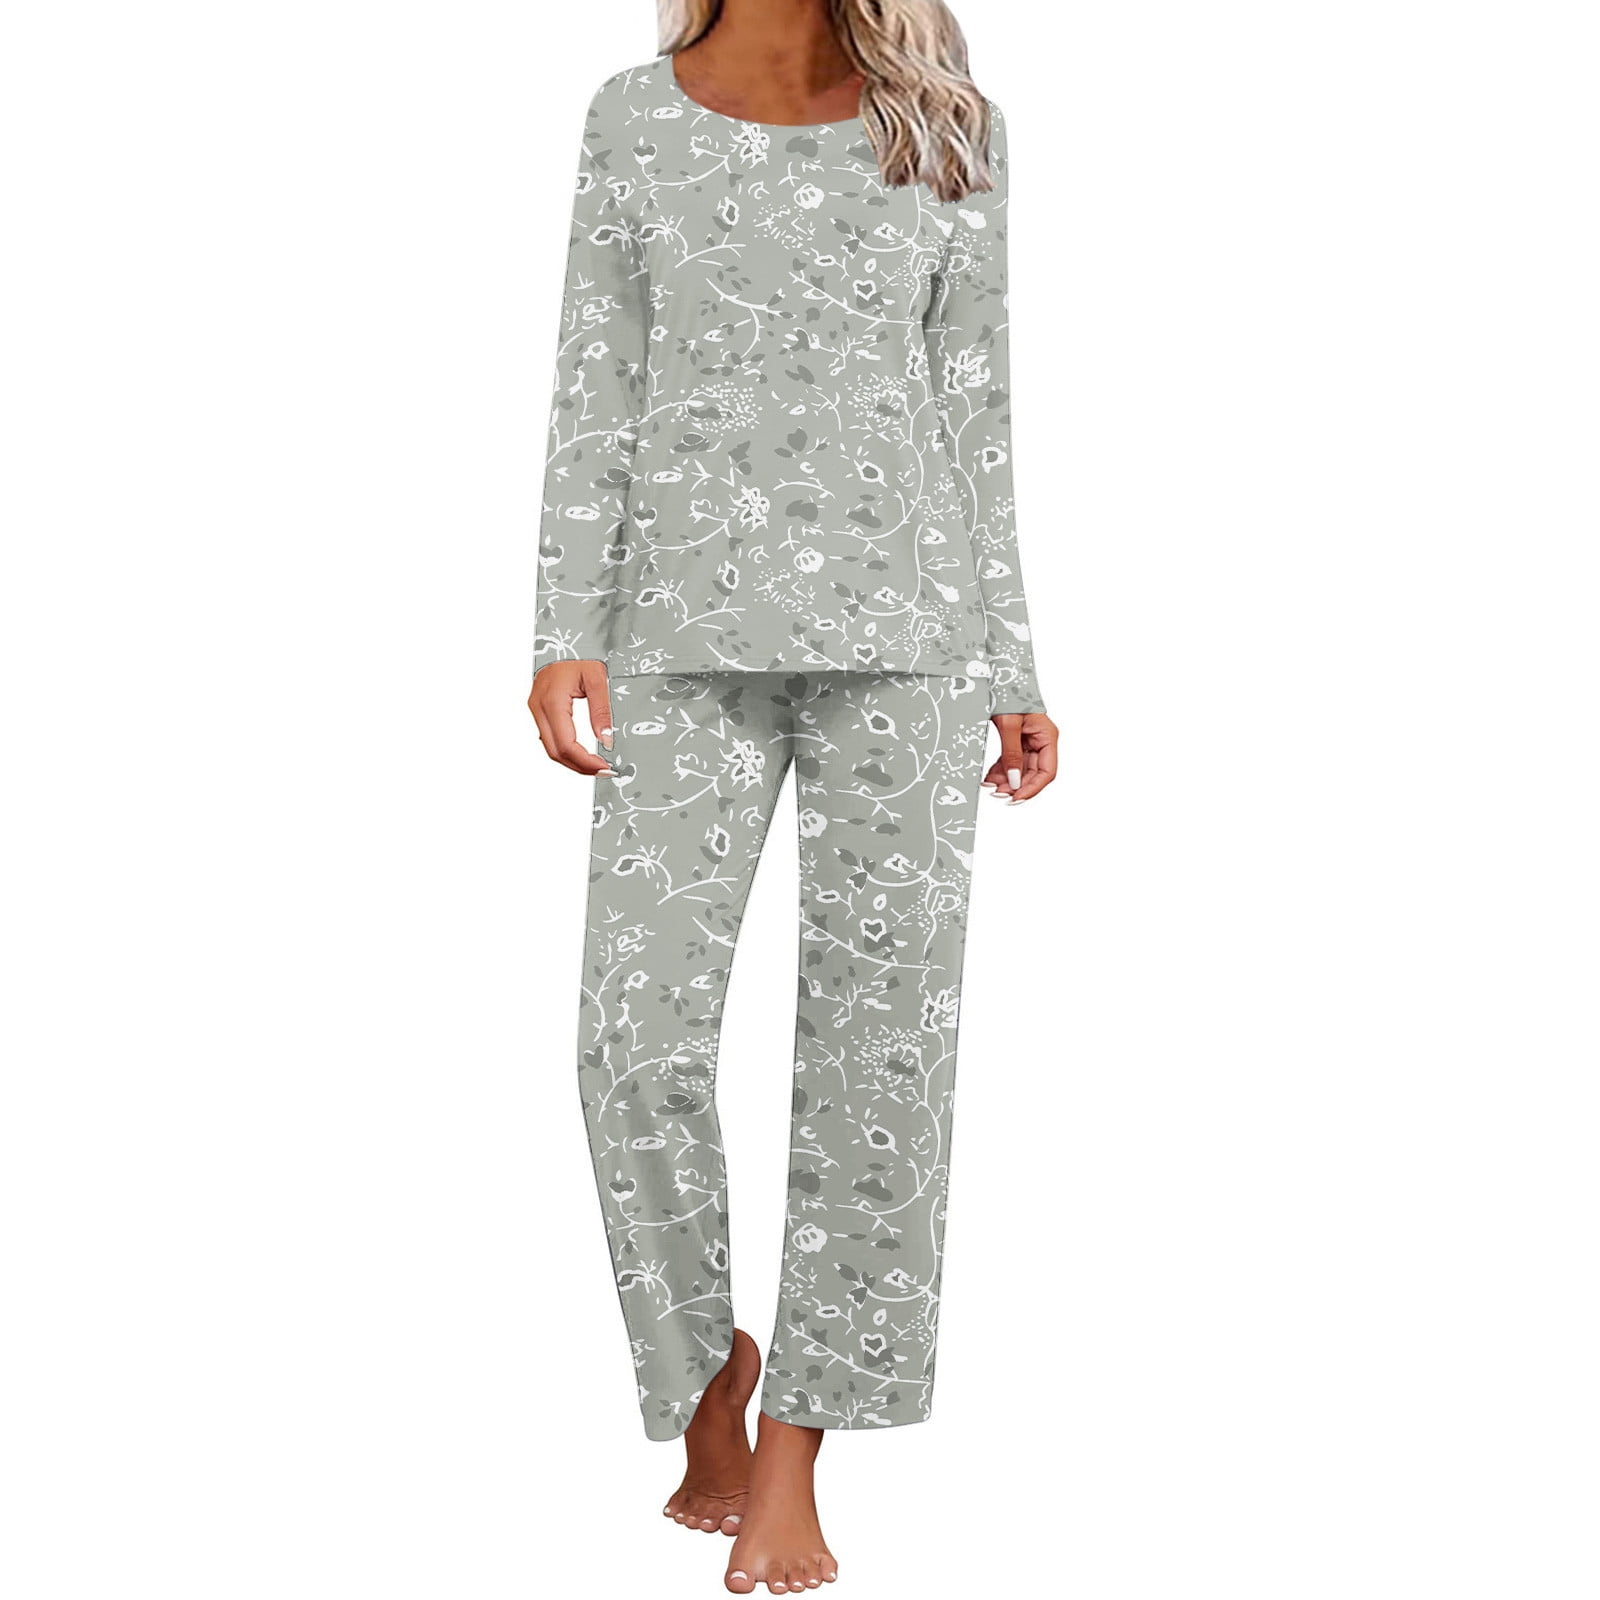 Shop Fashion Women's Pajamas 3 Pieces/lot Women Pajamas Sets Cotton Home  Wear Clothing Online